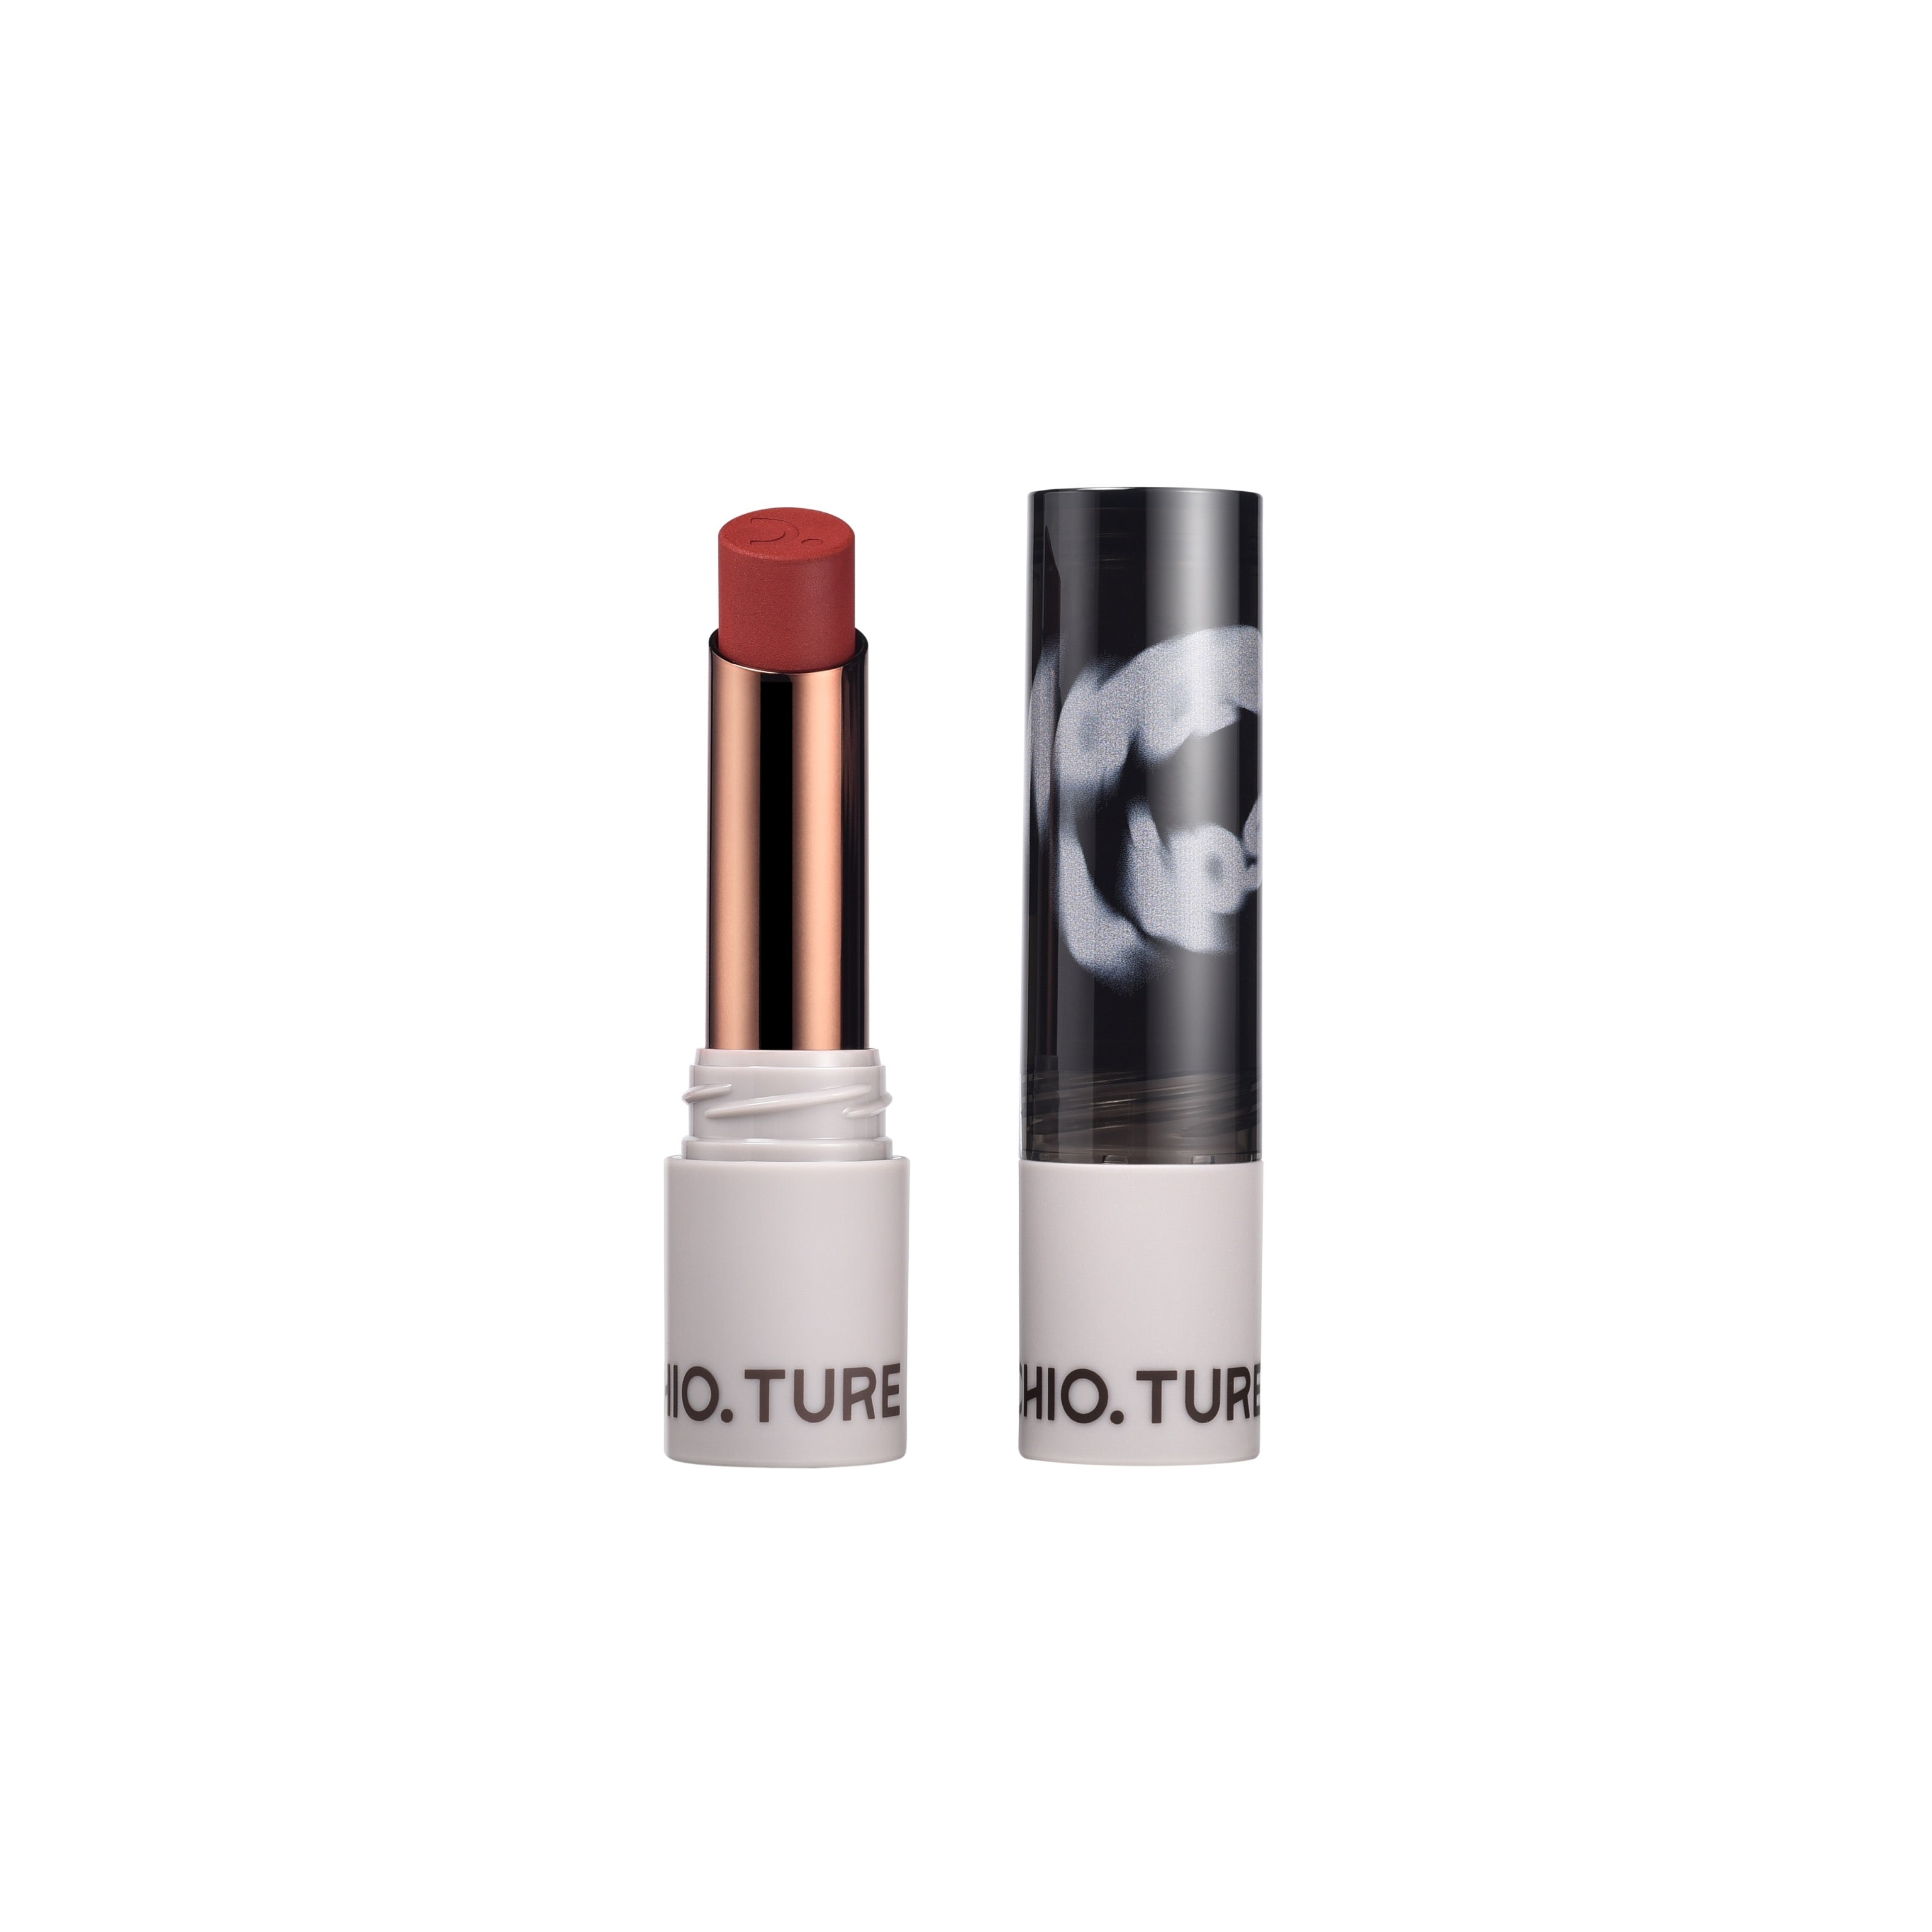 Chioture Long Lasting Lipstick COT081